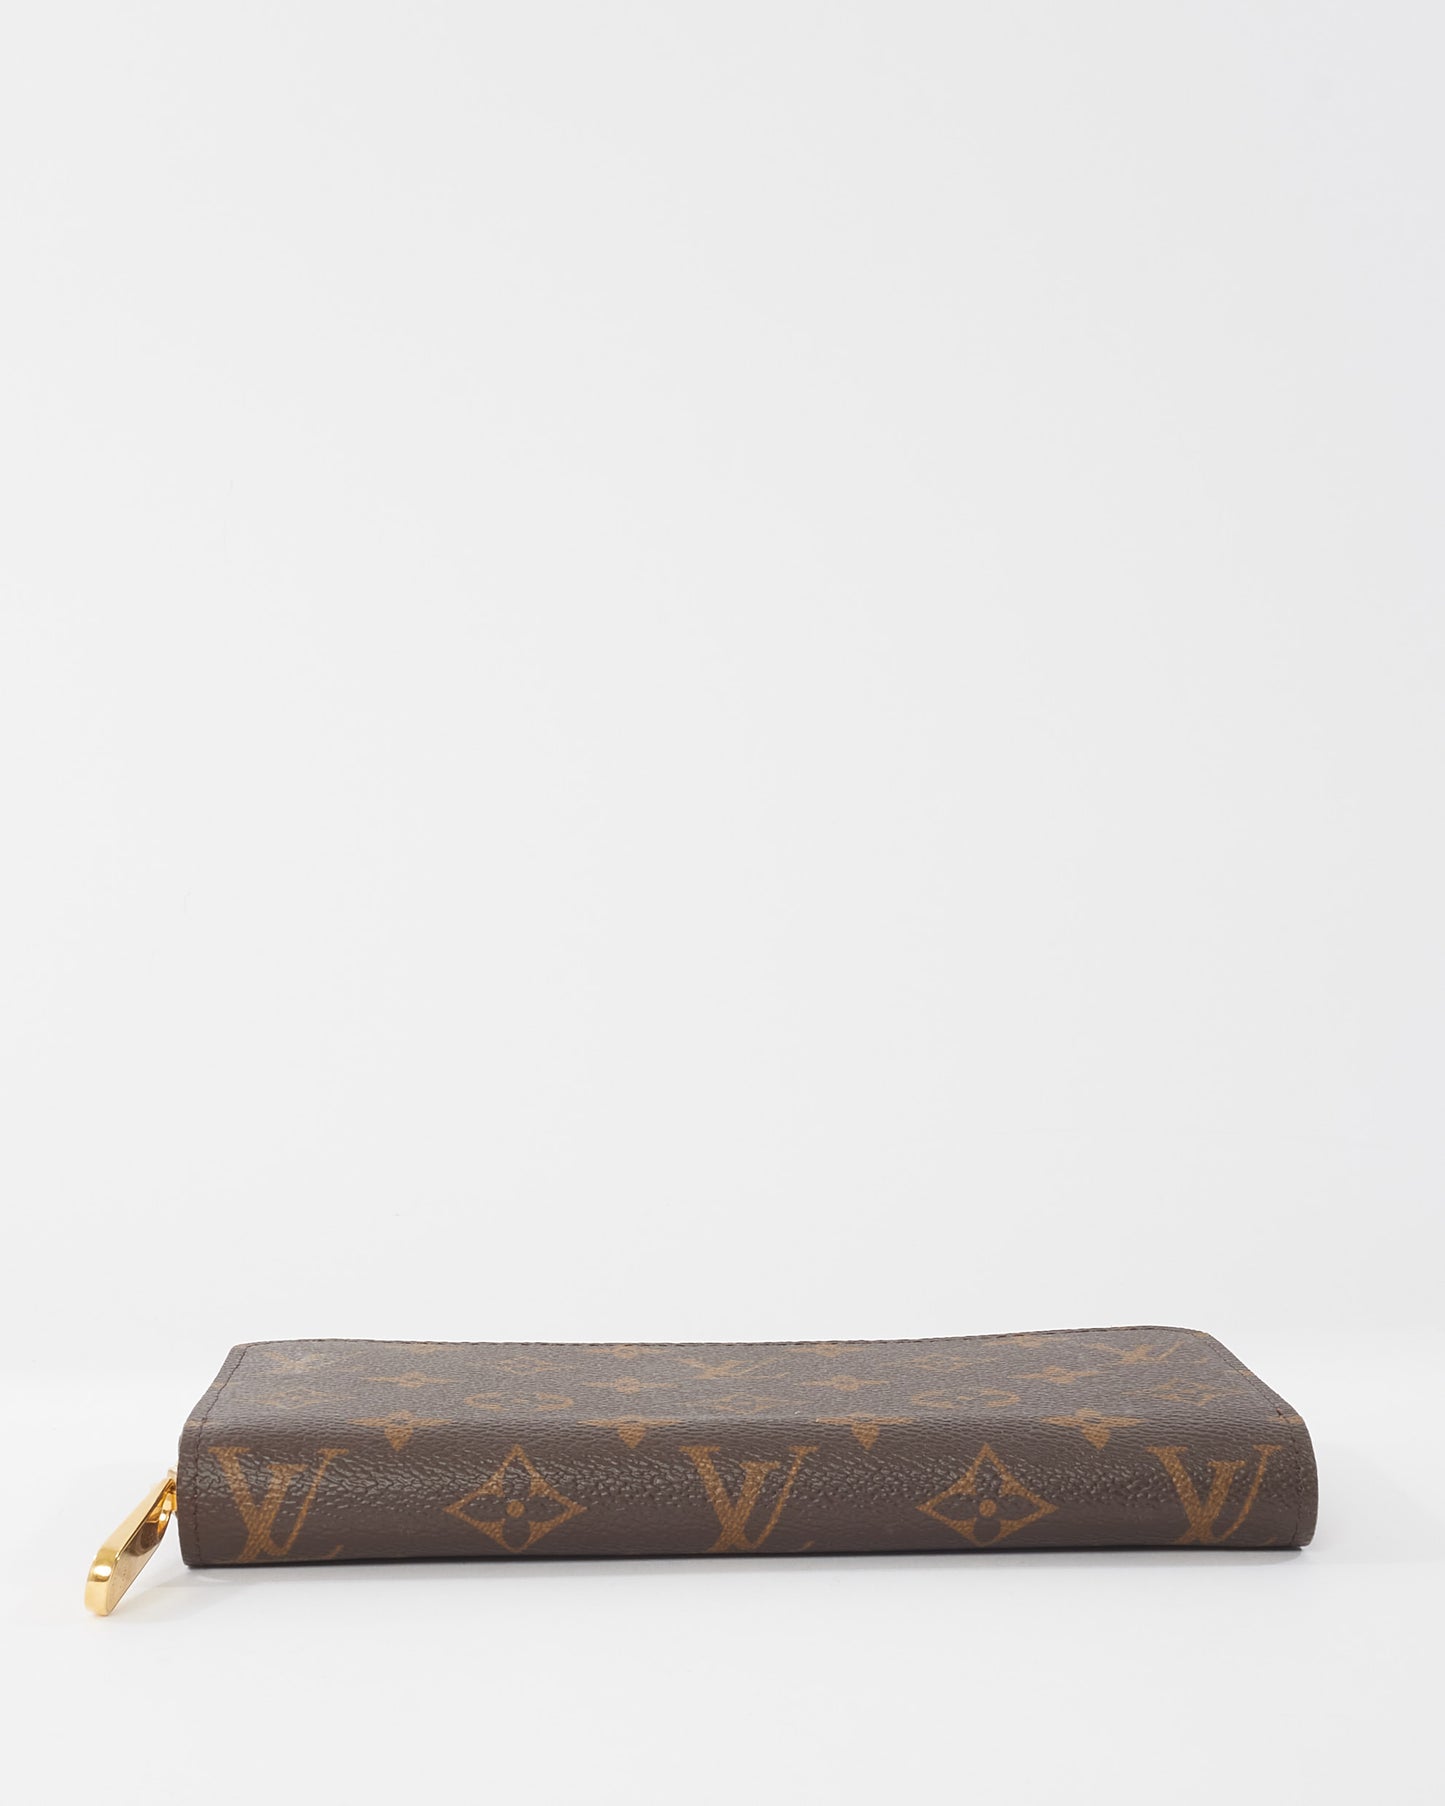 Louis Vuitton Monogram Canvas Long Zippy Wallet